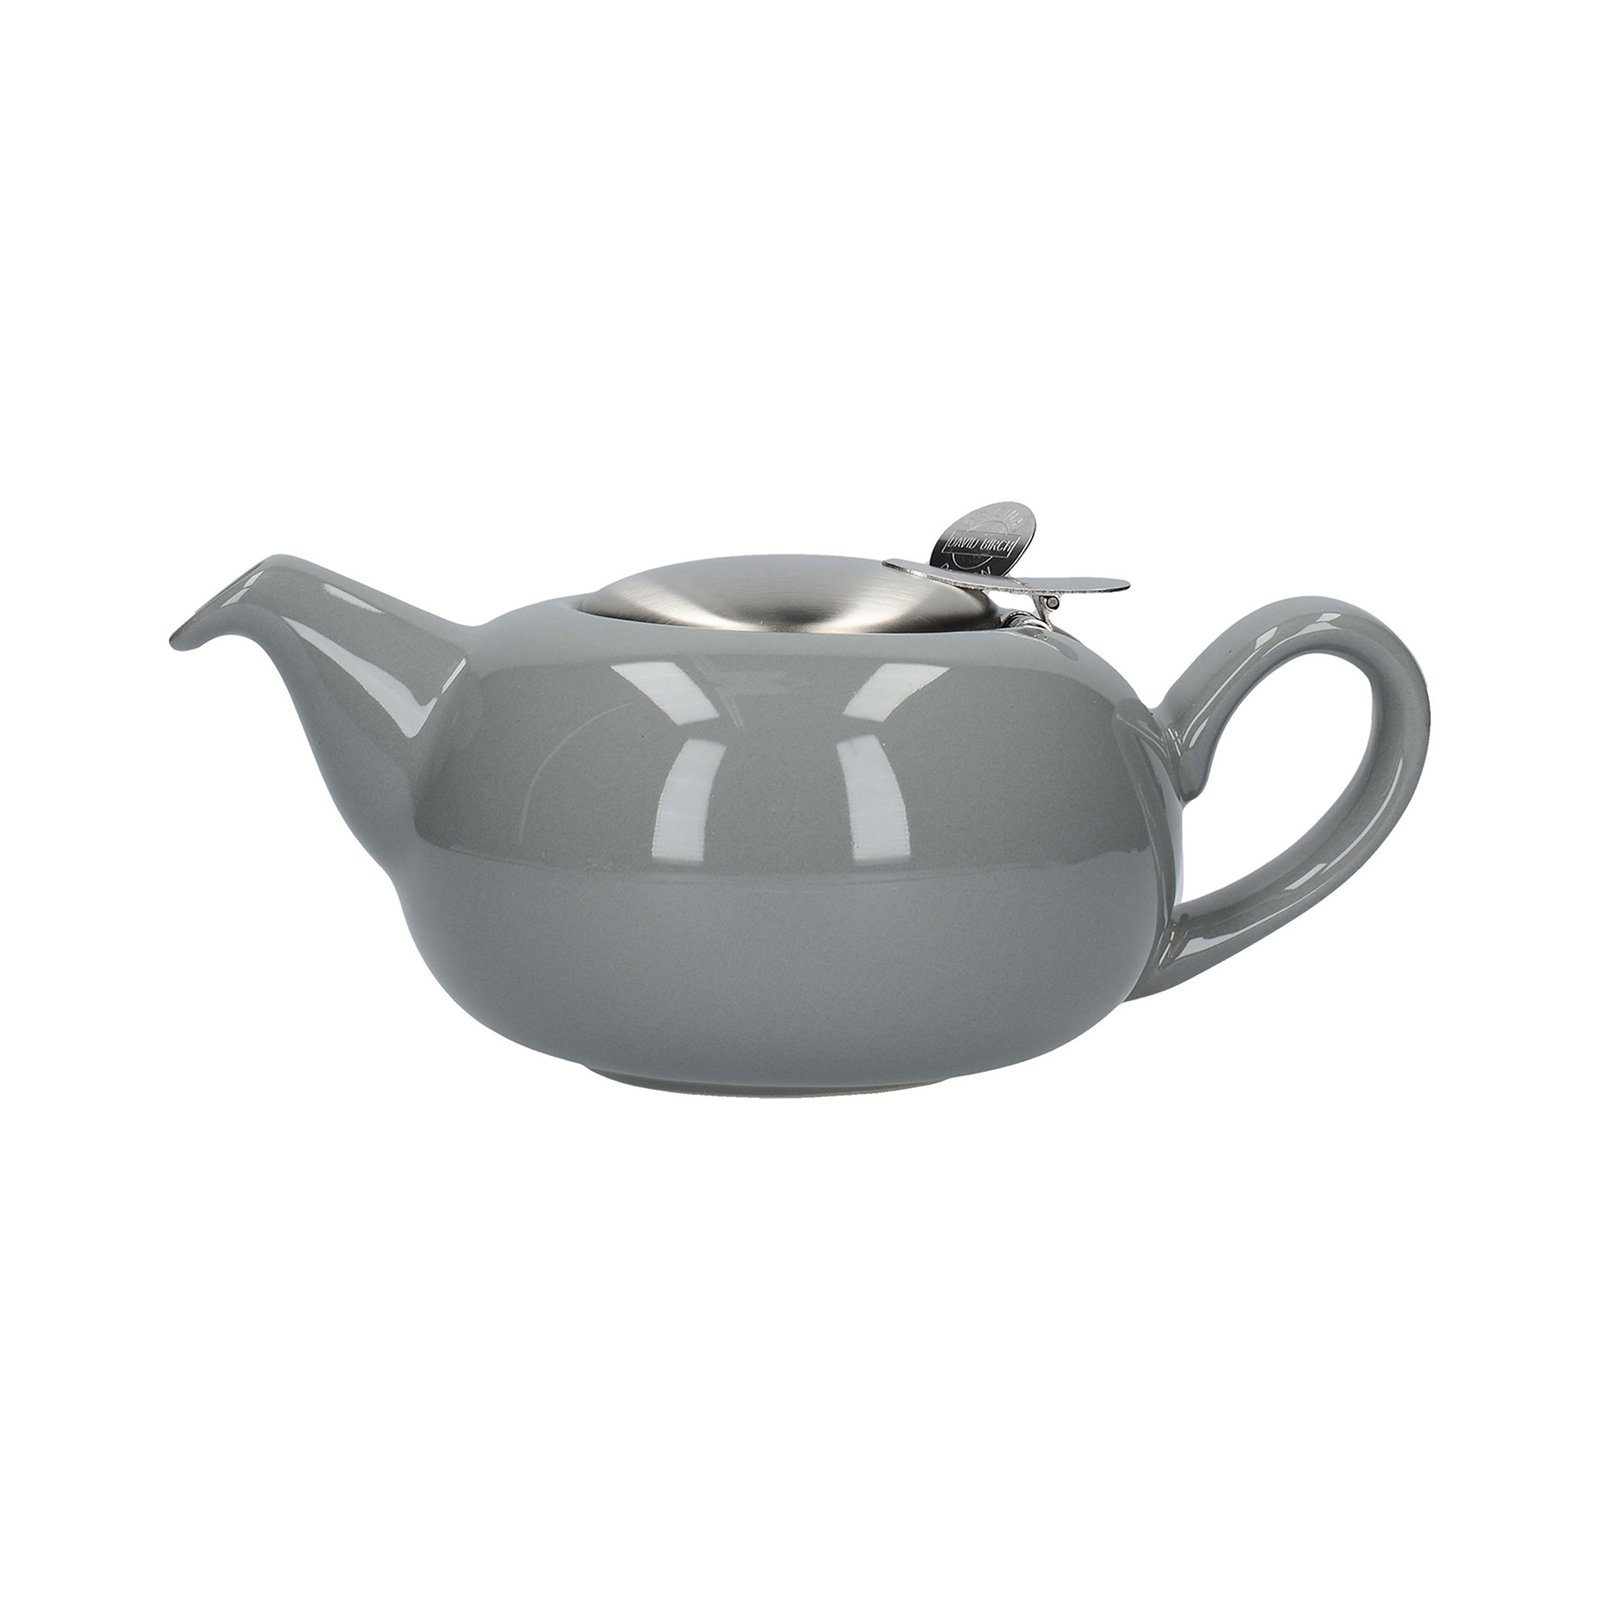 Neuetischkultur Teekanne Teekanne mit Sieb, 2 Tassen 500 ml, Keramik, 0.5 l Hellgrau